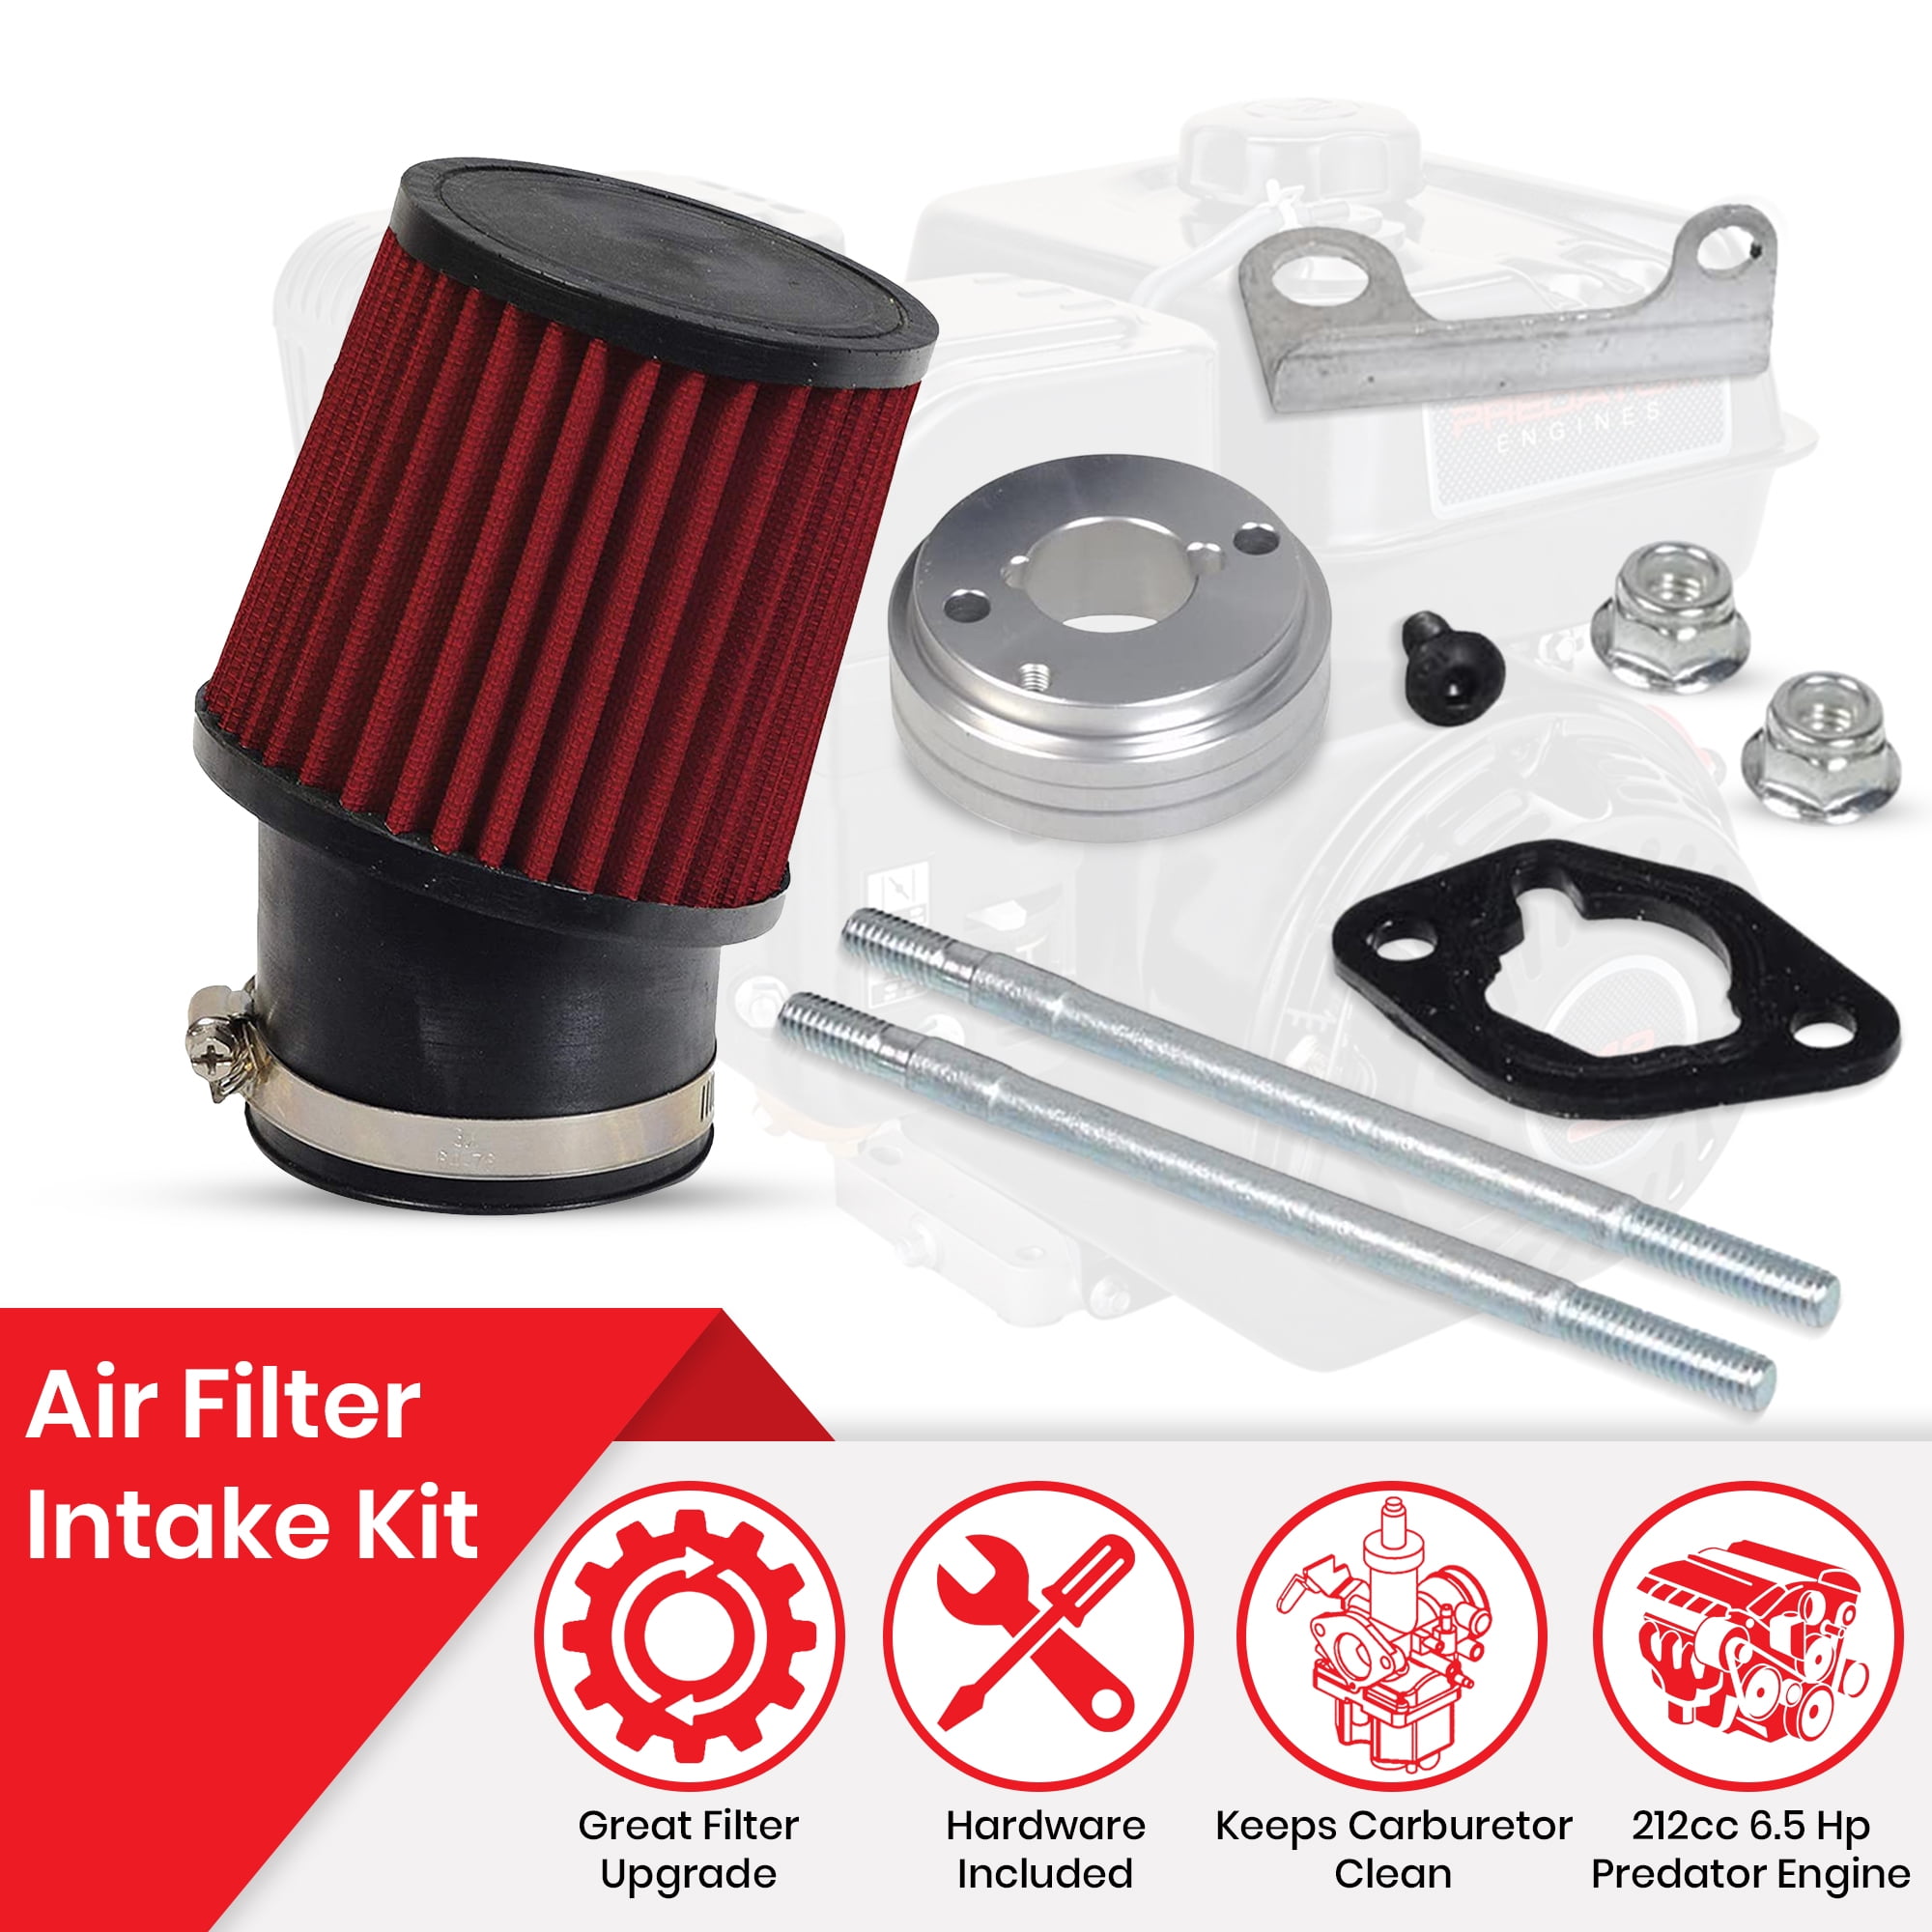 AlveyTech High Performance Air Filter Intake Kit for Hammerhead